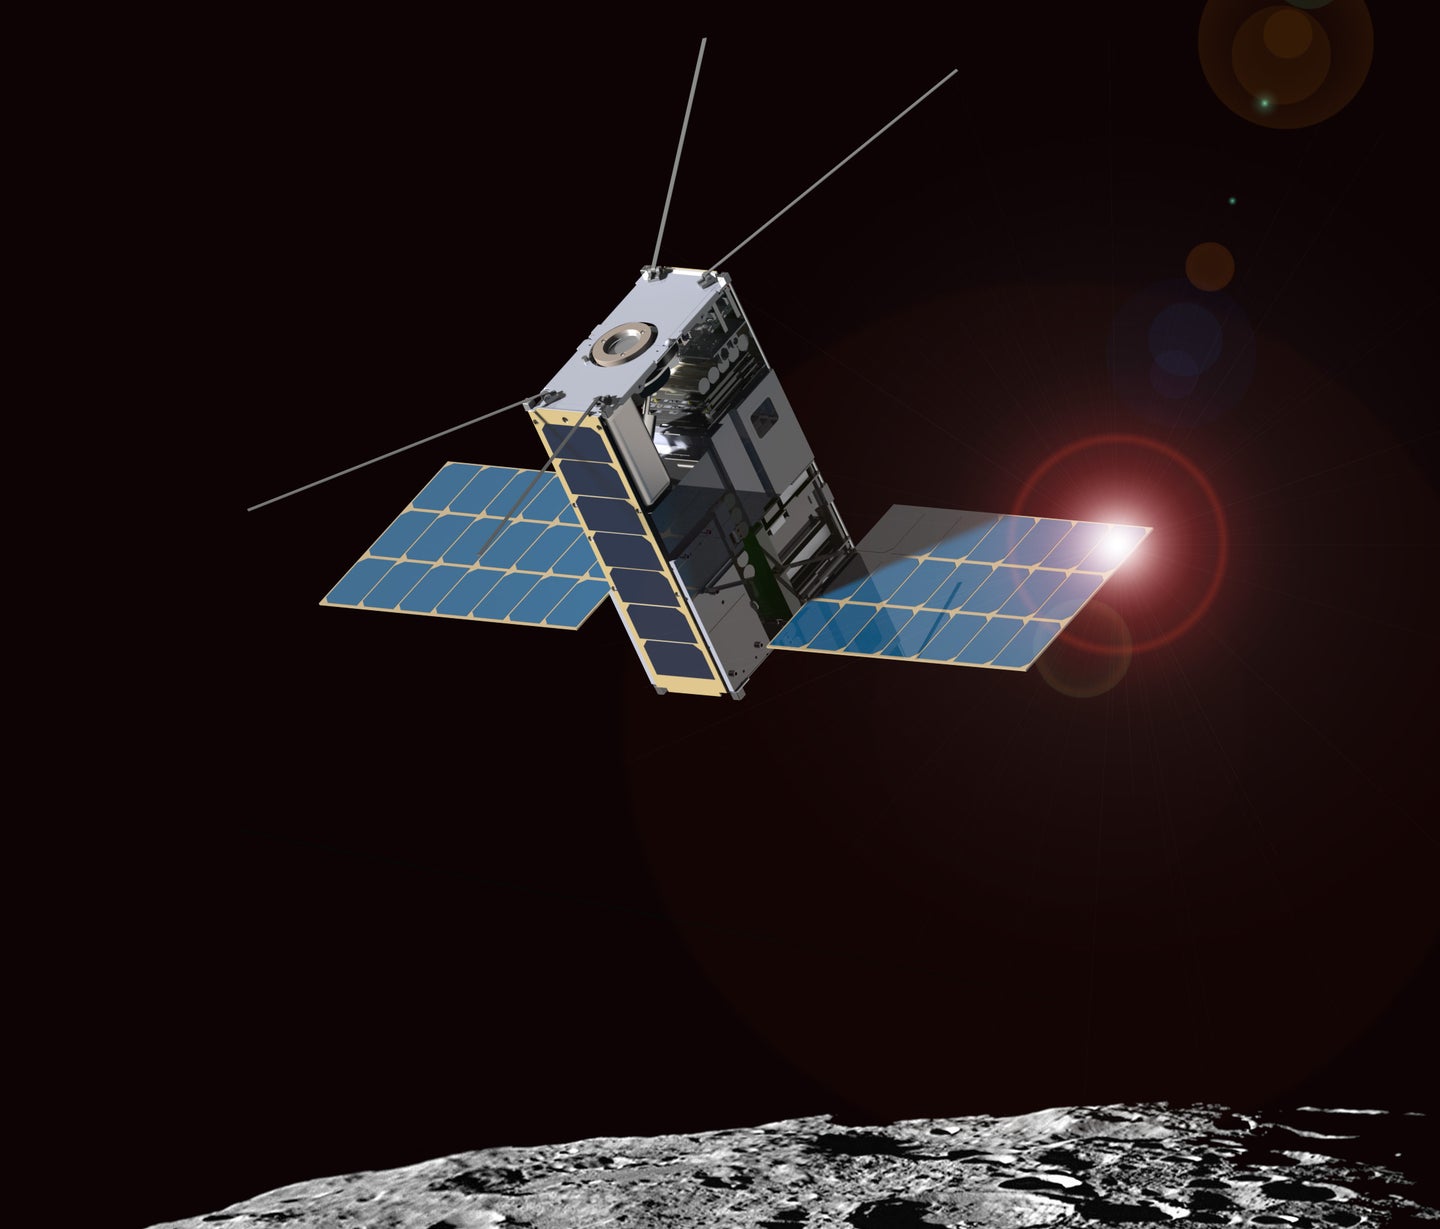 Tiny ‘Lunar IceCube’ Spacecraft Could Help NASA Build A Moon Mine